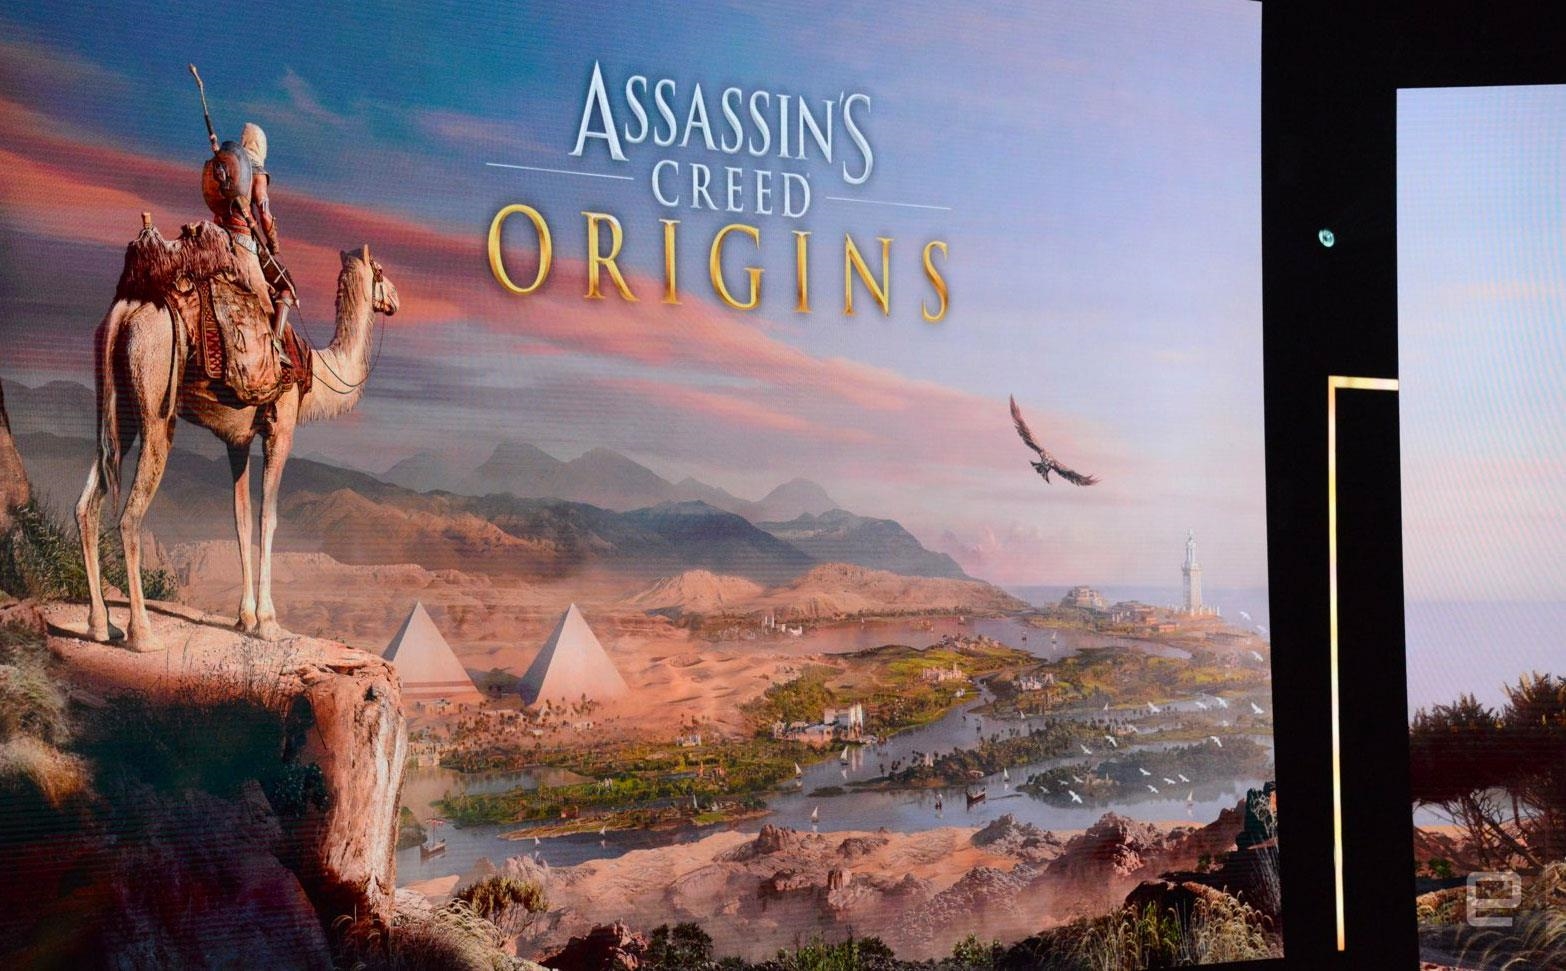 'Assassin's Creed Origins' arrives October 27th | DeviceDaily.com